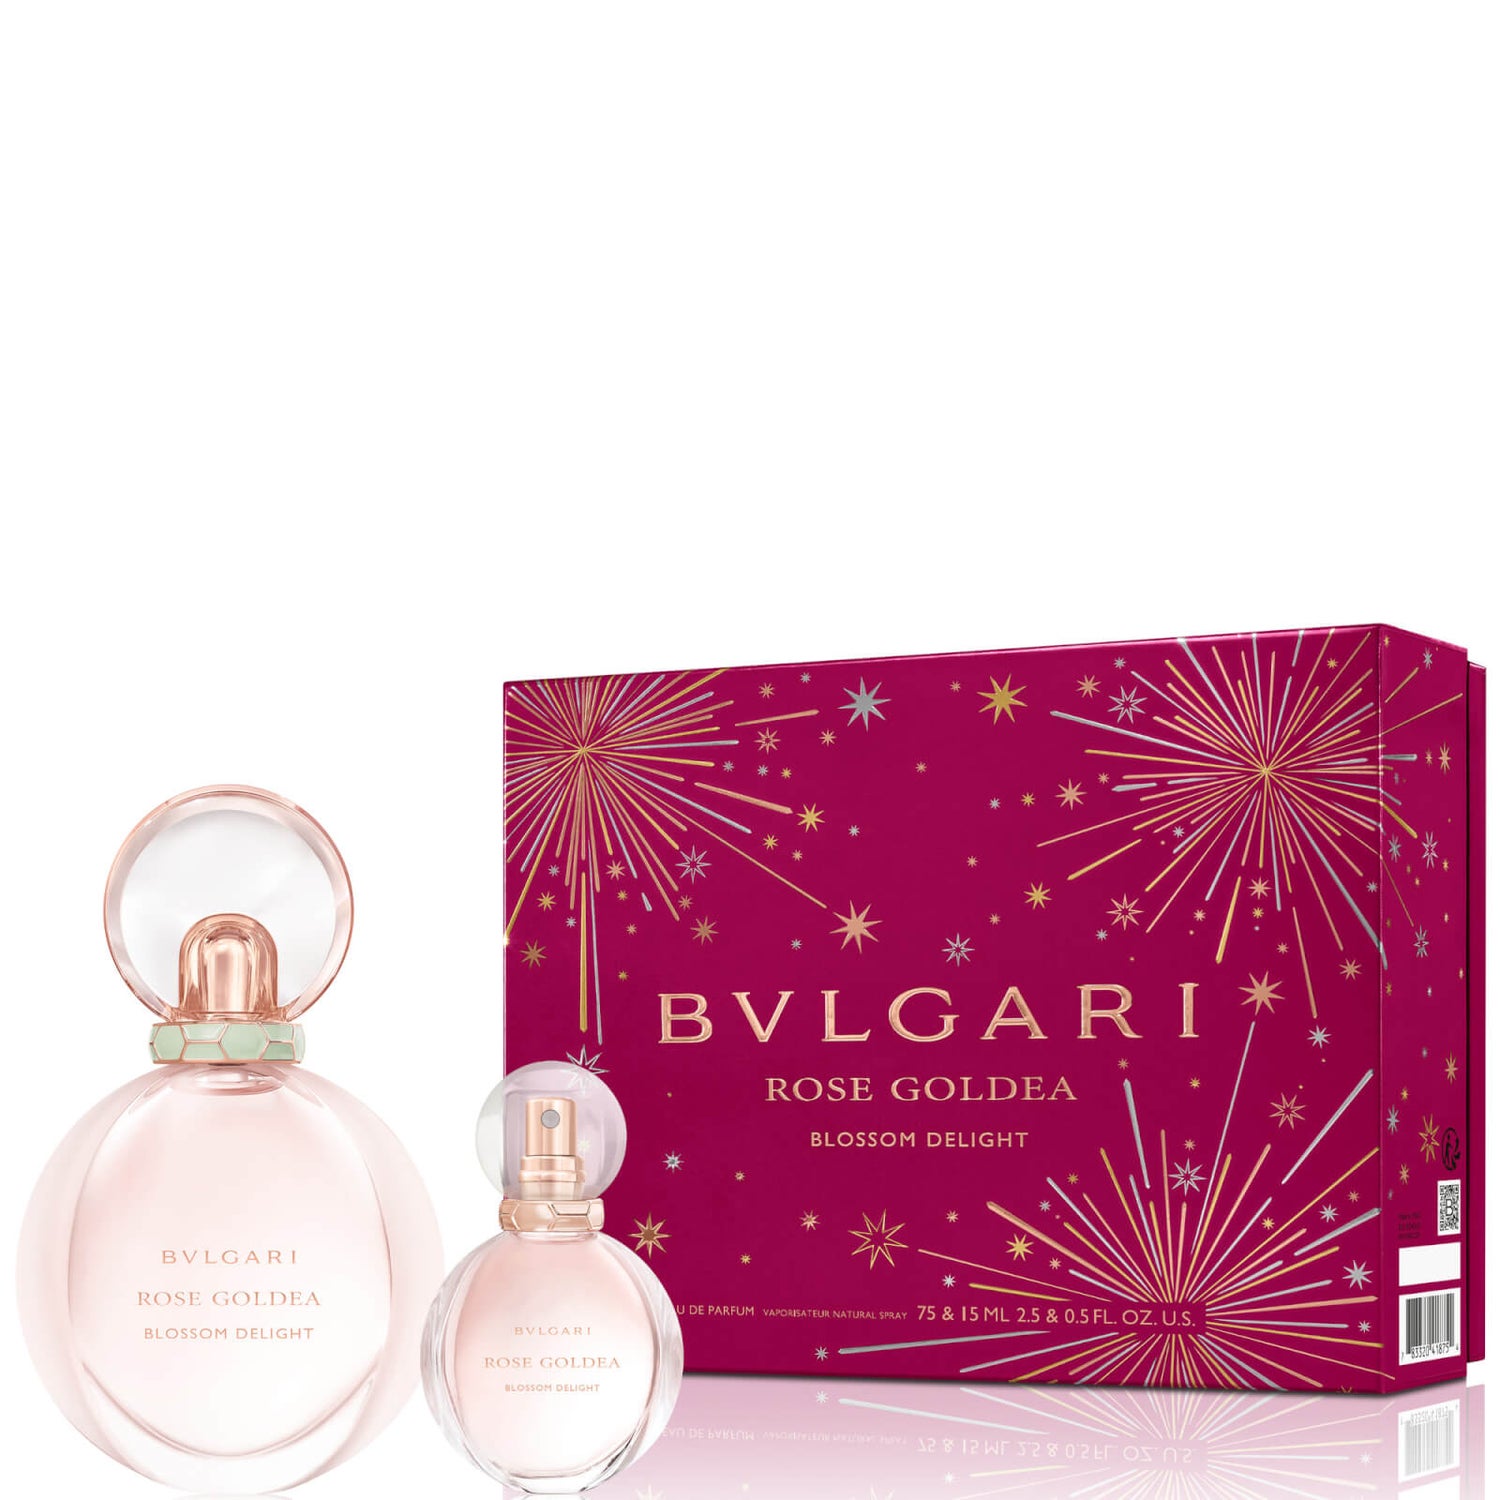 BVLGARI Rose Goldea Blossom Delight Juice Juice Christmas Set (Worth £127.00)